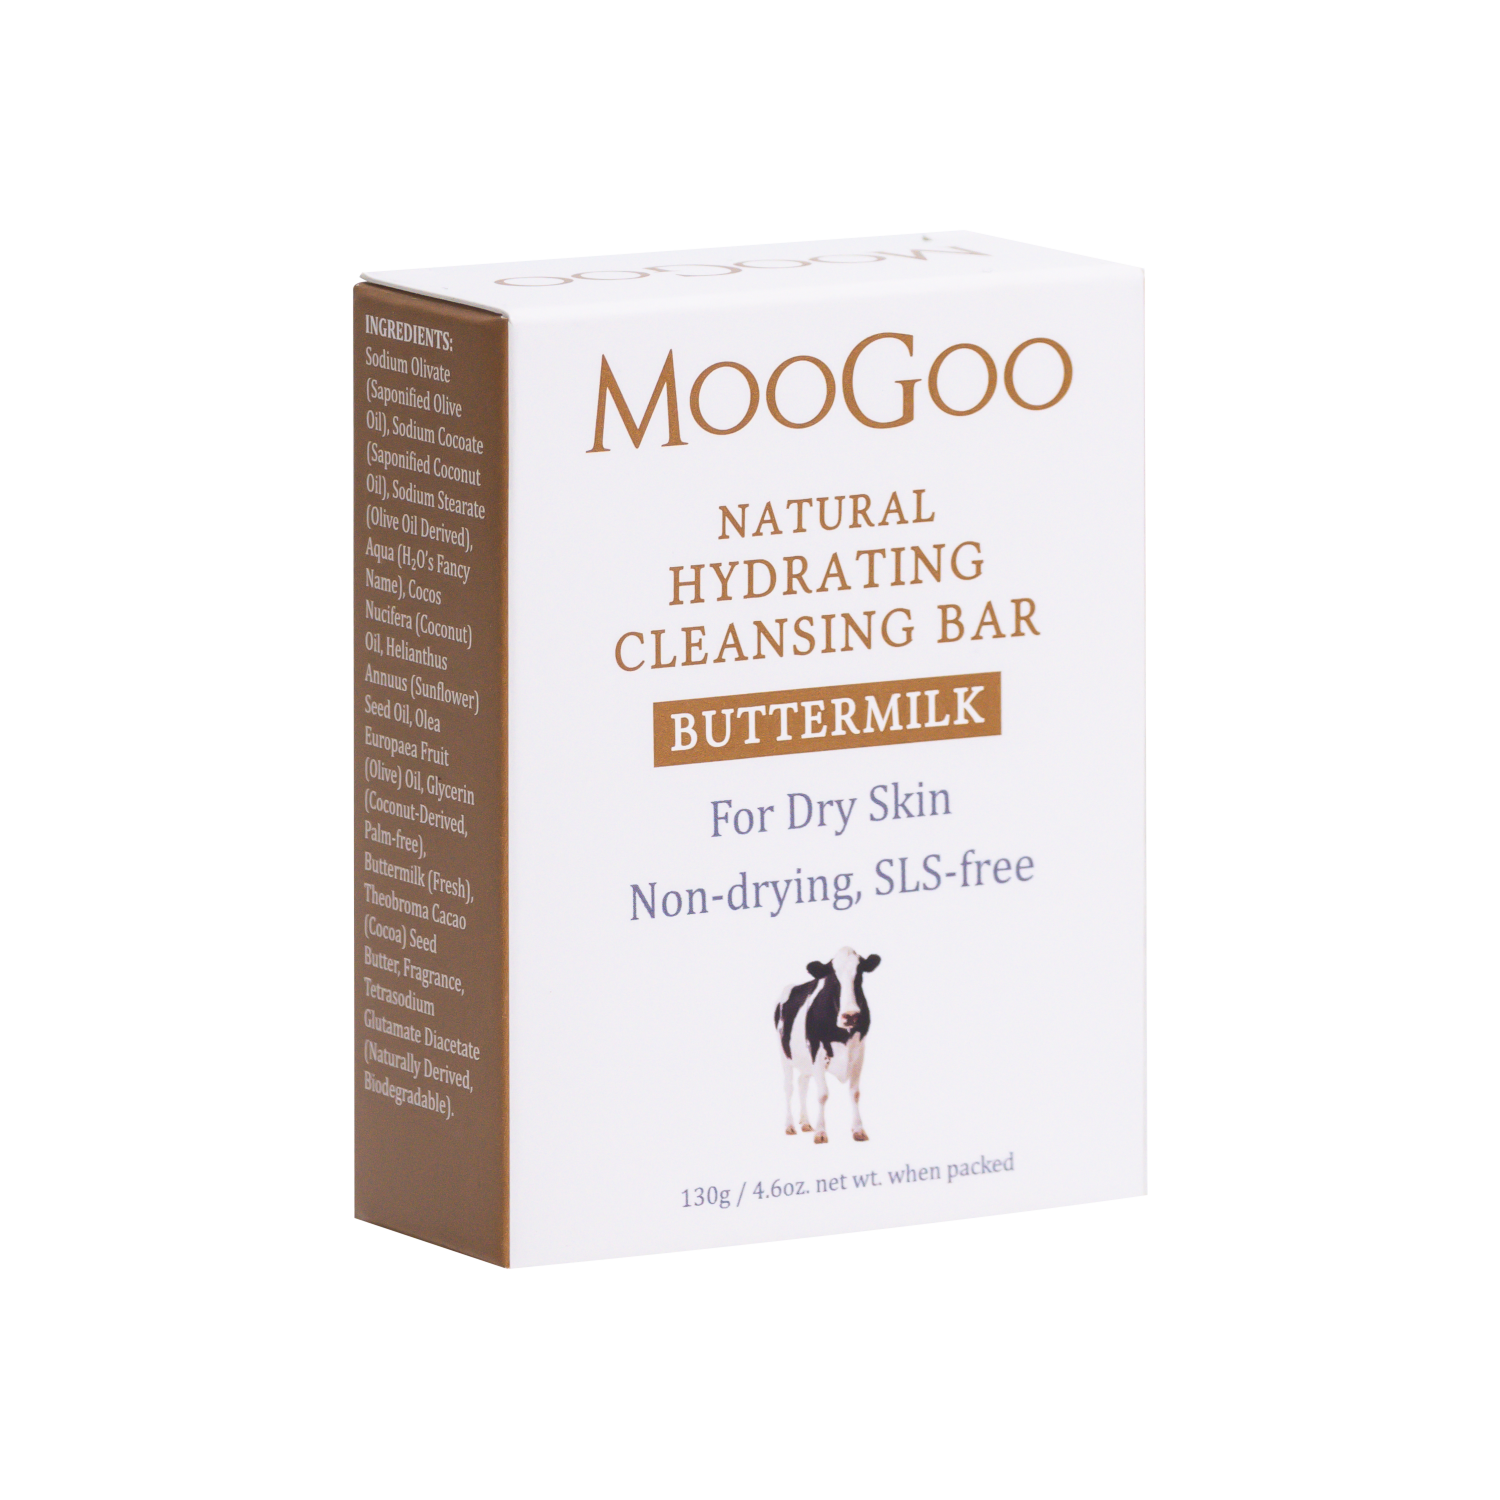 MooGoo Natural Hydrating Cleansing Bar - Buttermilk